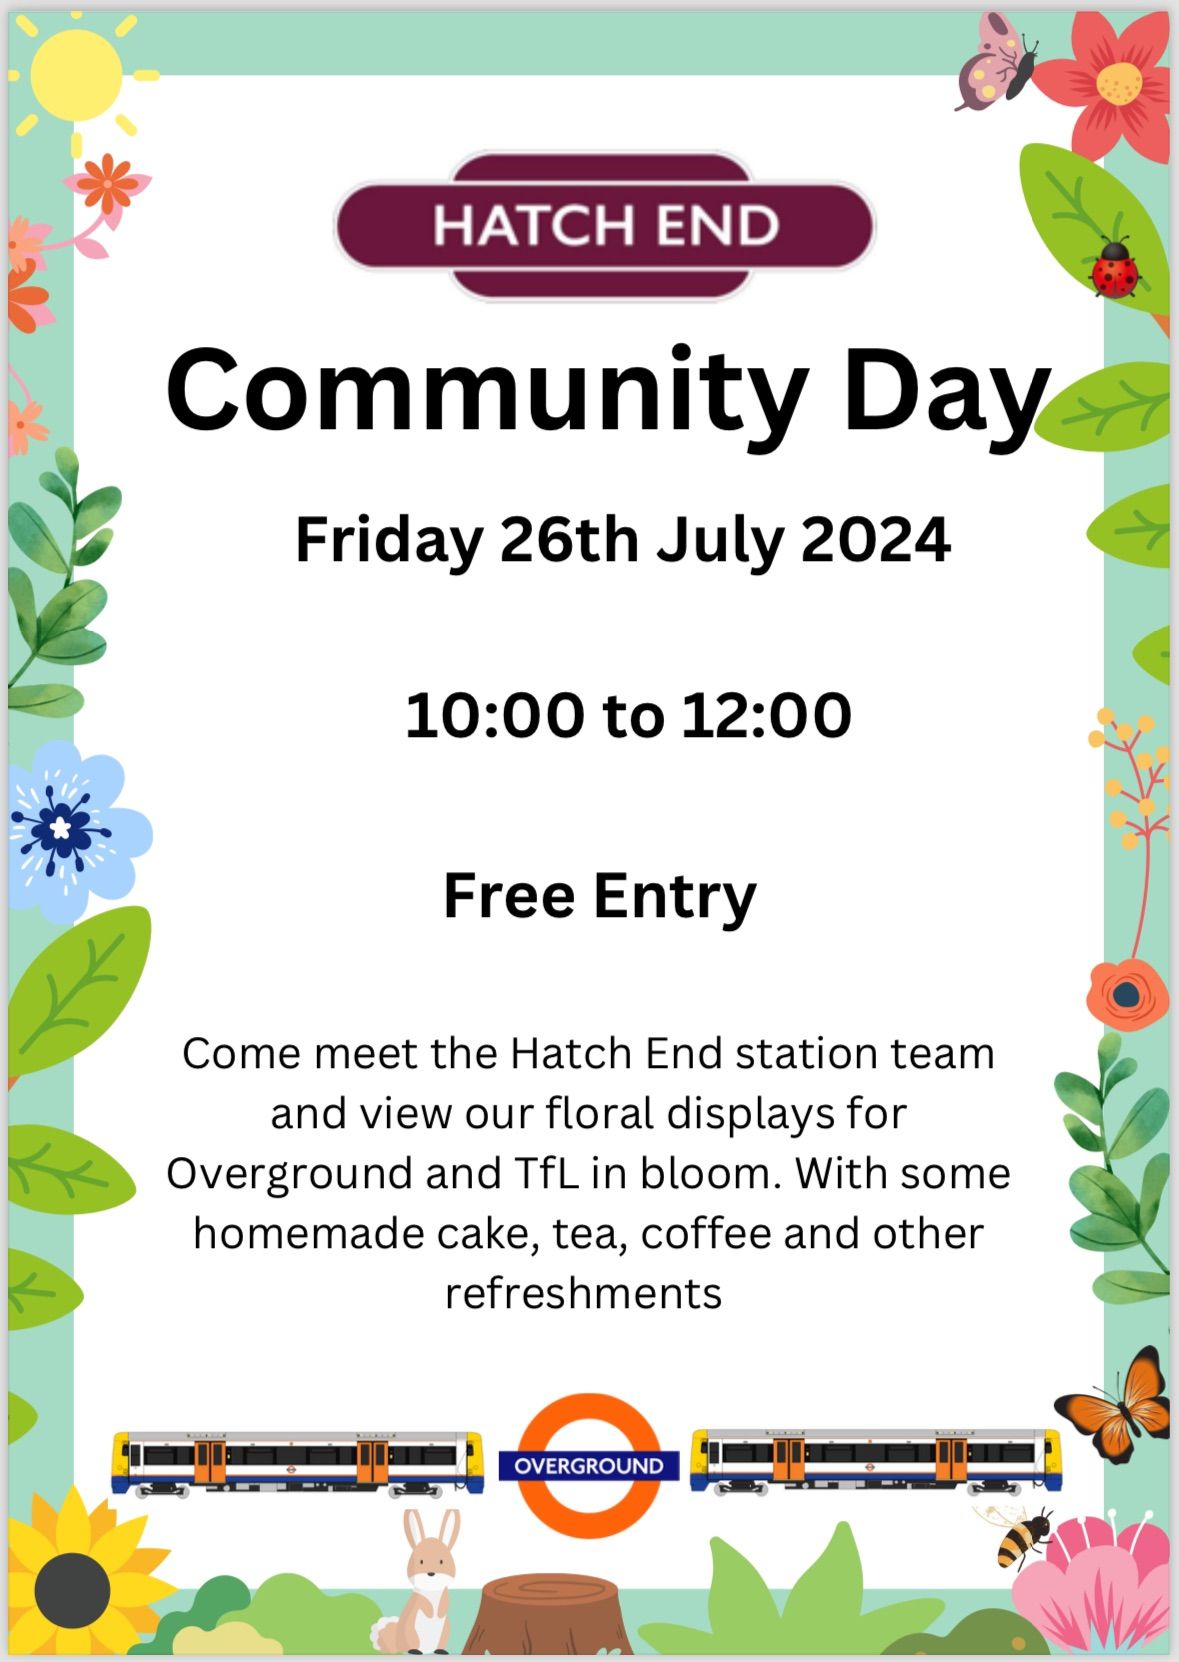 Hatch End Community Day